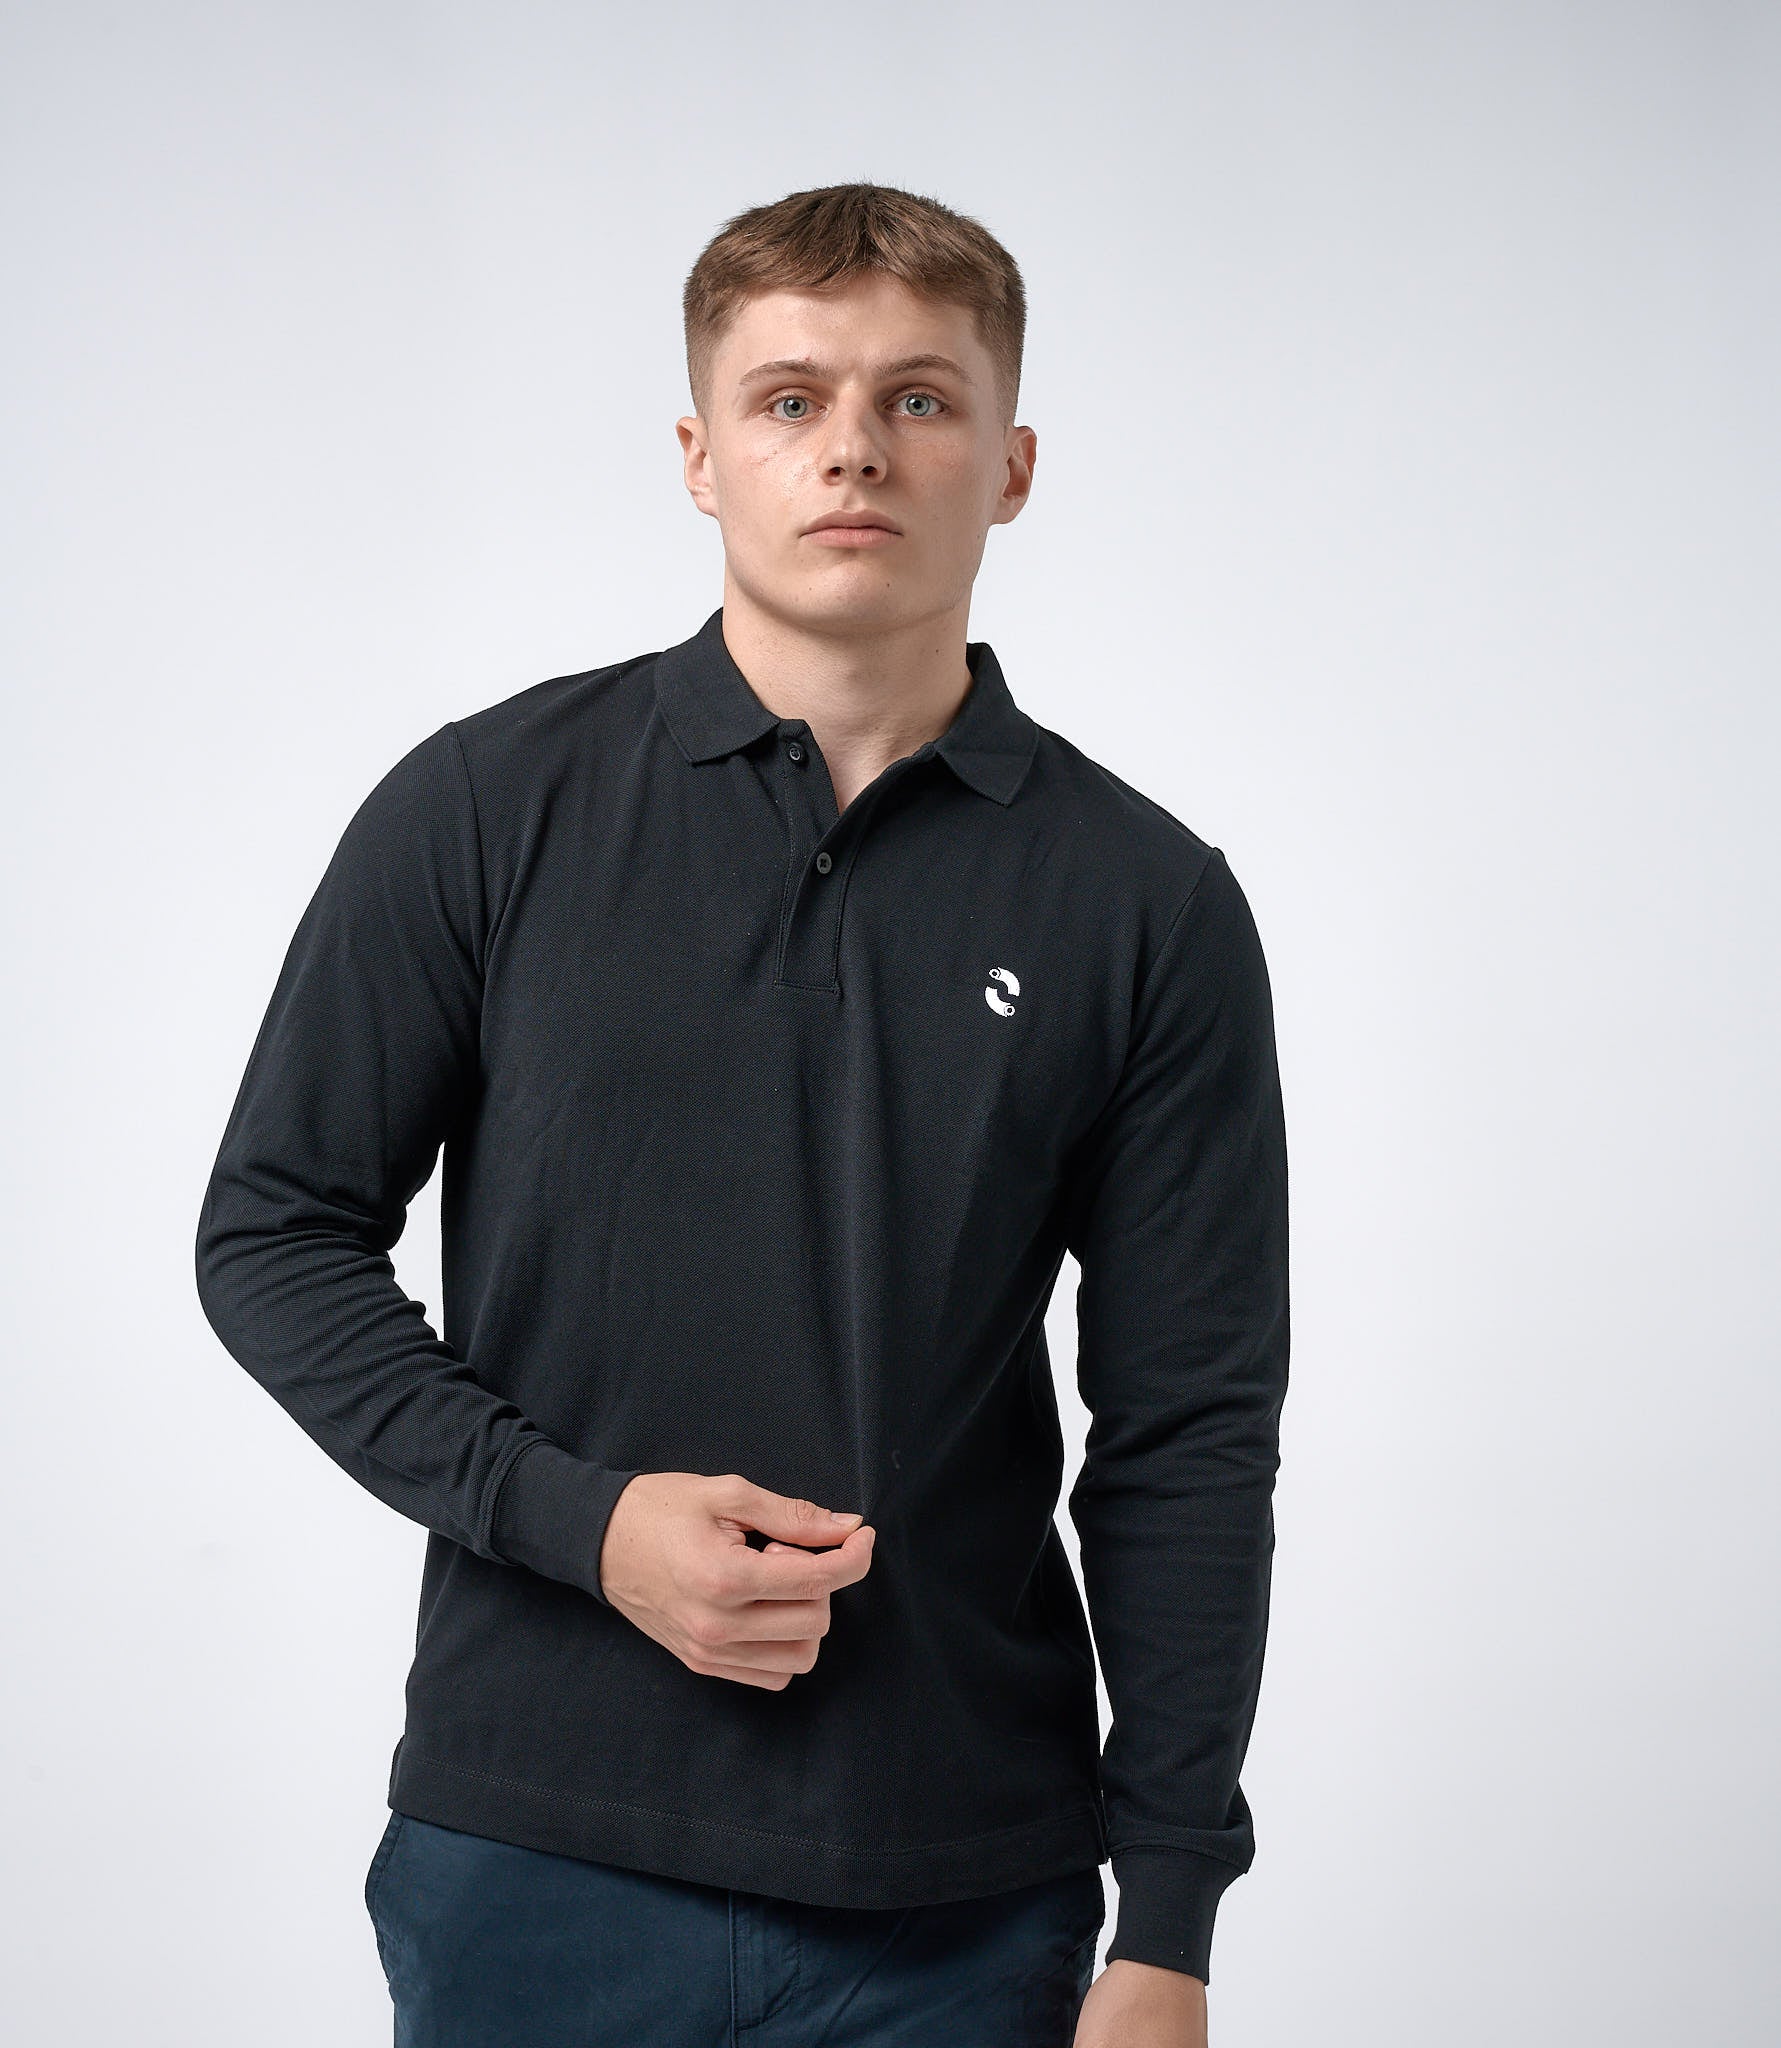 Omnitau Men's Pimlico Organic Cotton Long Sleeve Polo Shirt - Black